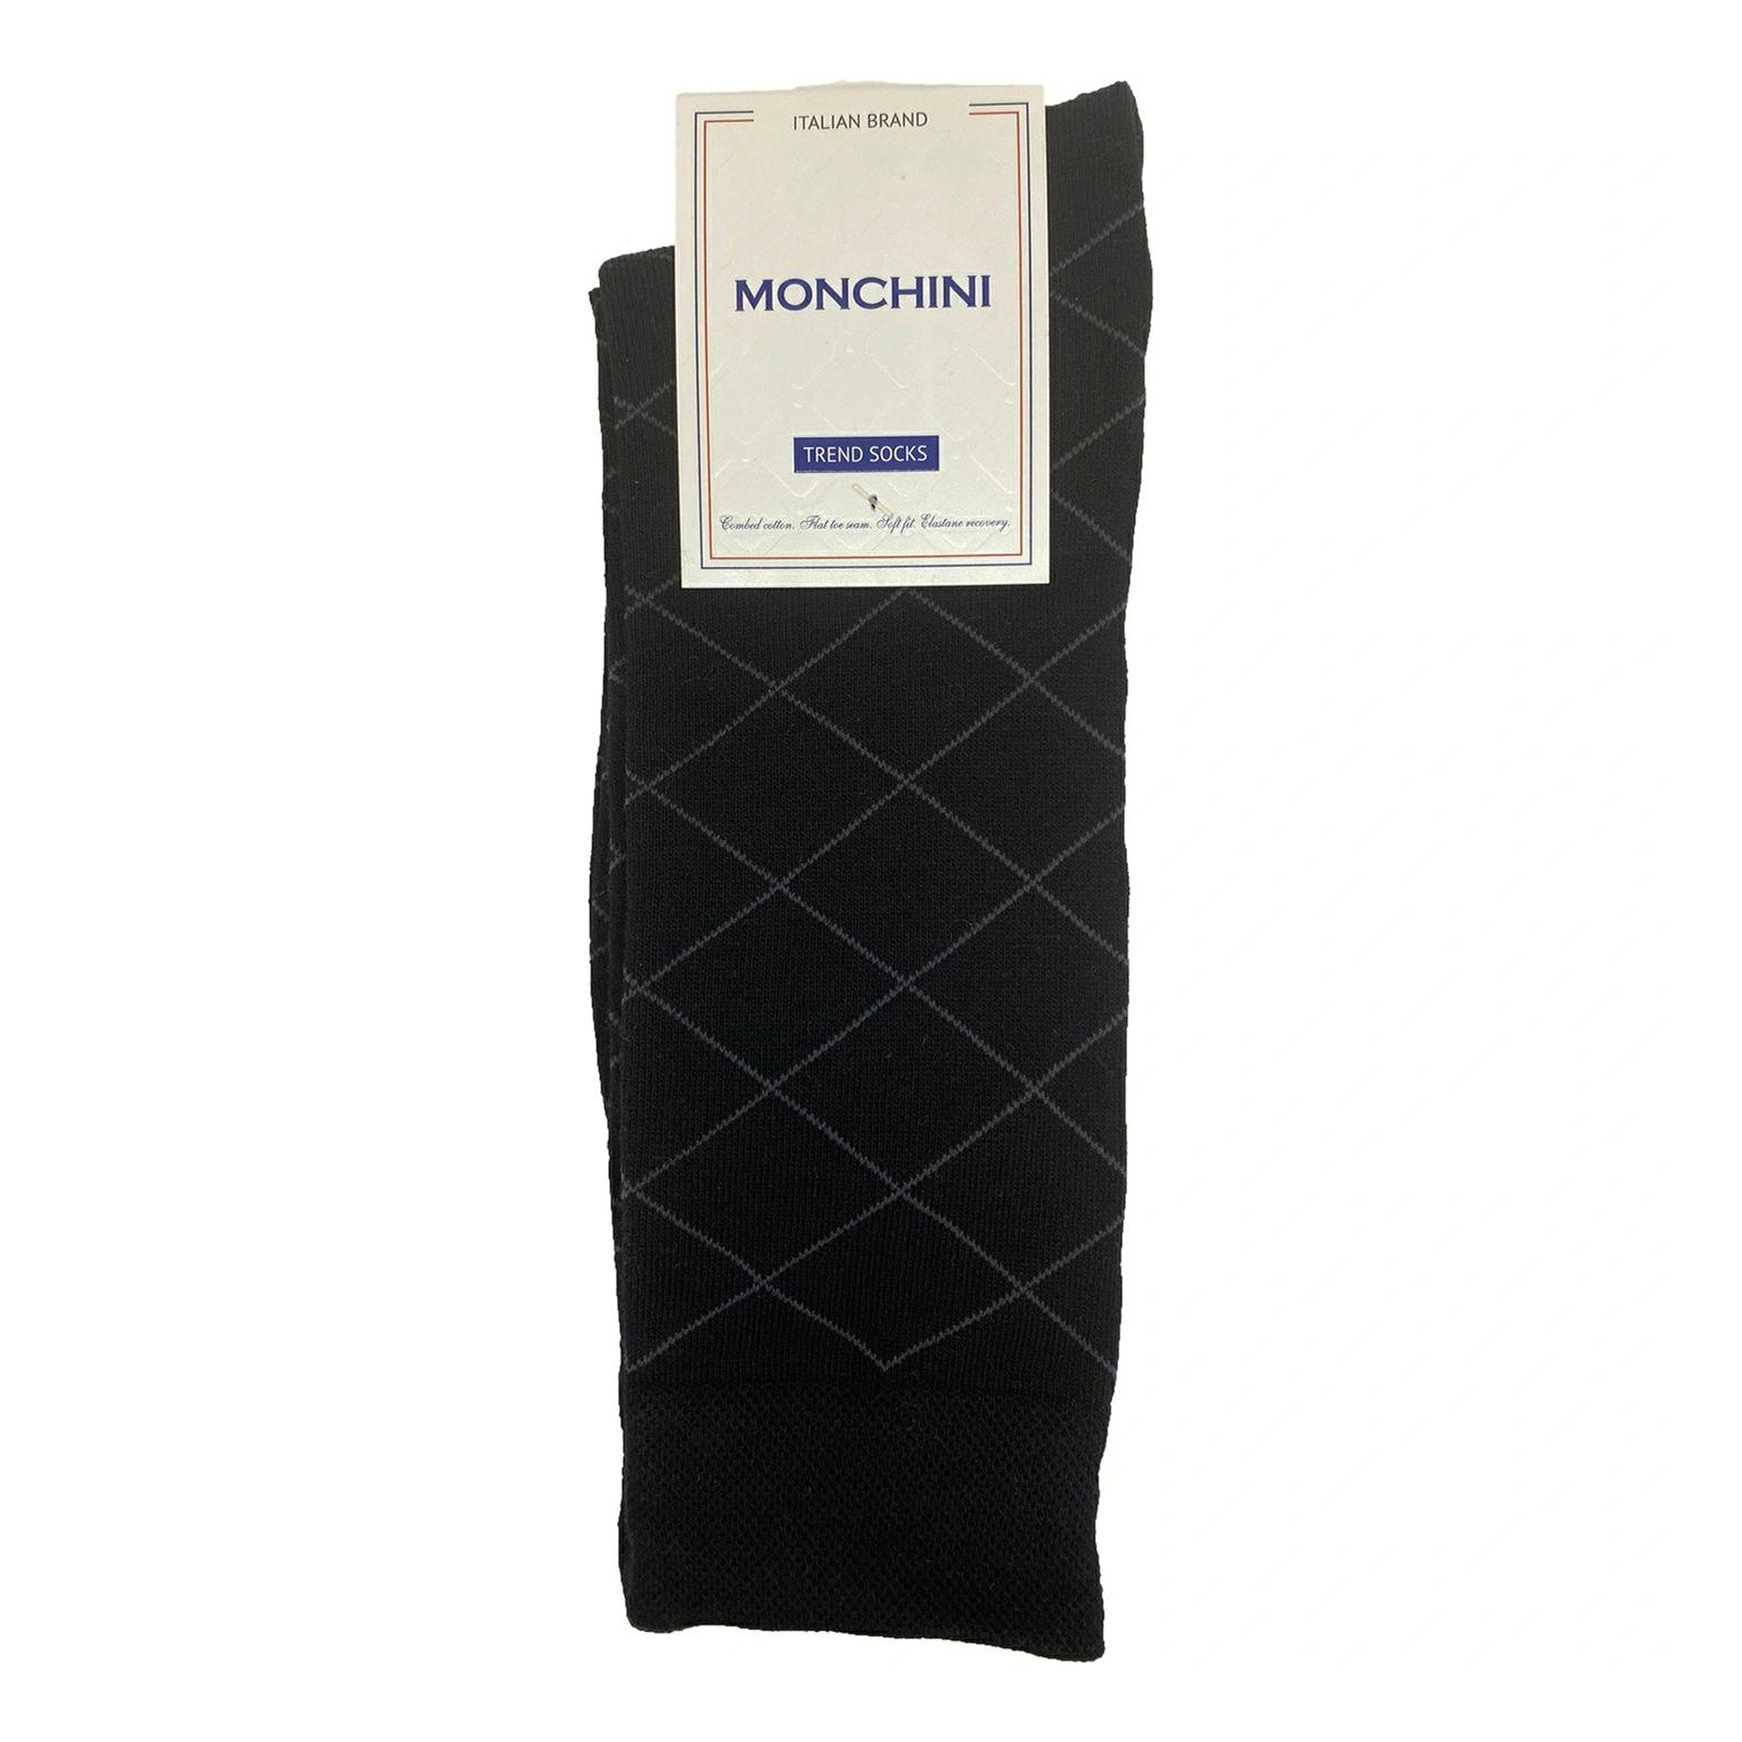 Носки мужские Monchini товар продается в ассортименте